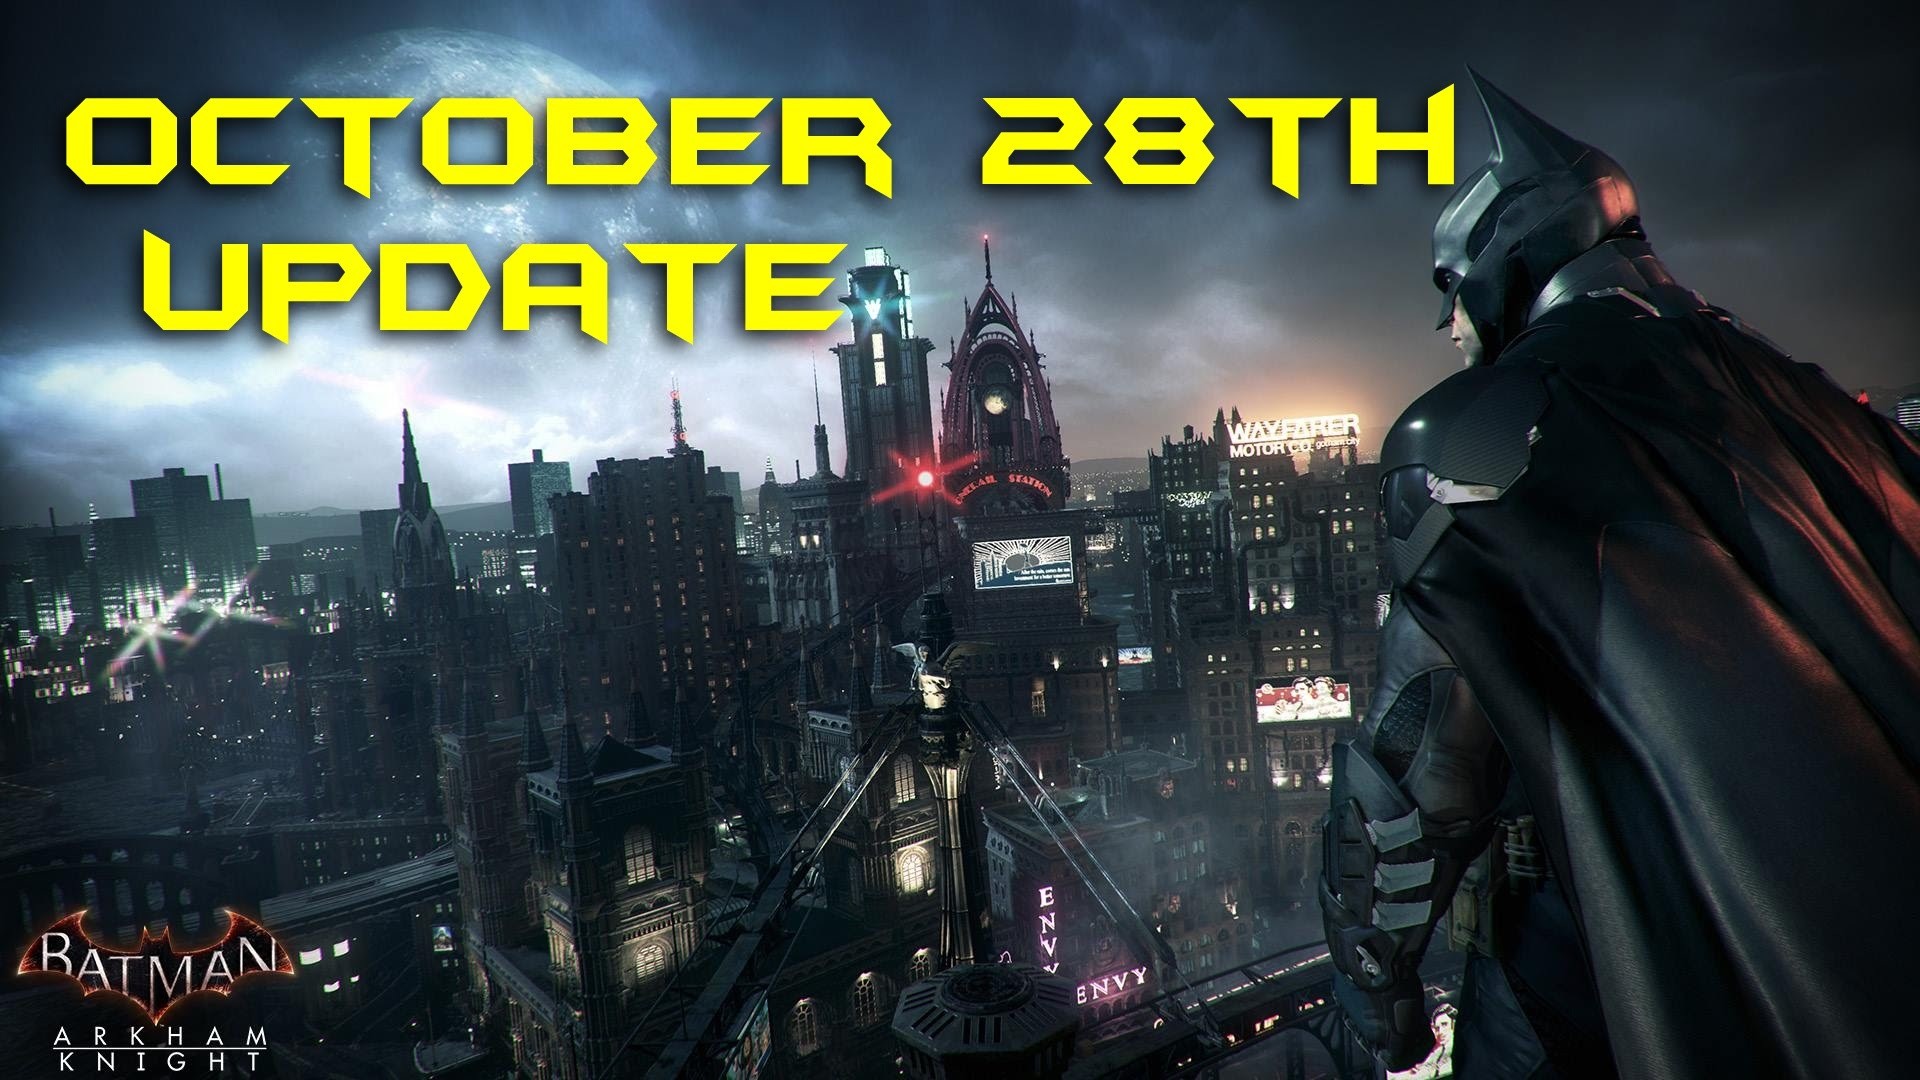 1920x1080 Batman: Arkham Knight October 28th Update | GTX 970 OC & i7 6700k | 1080p  GameWorks OFF & ON - YouTube